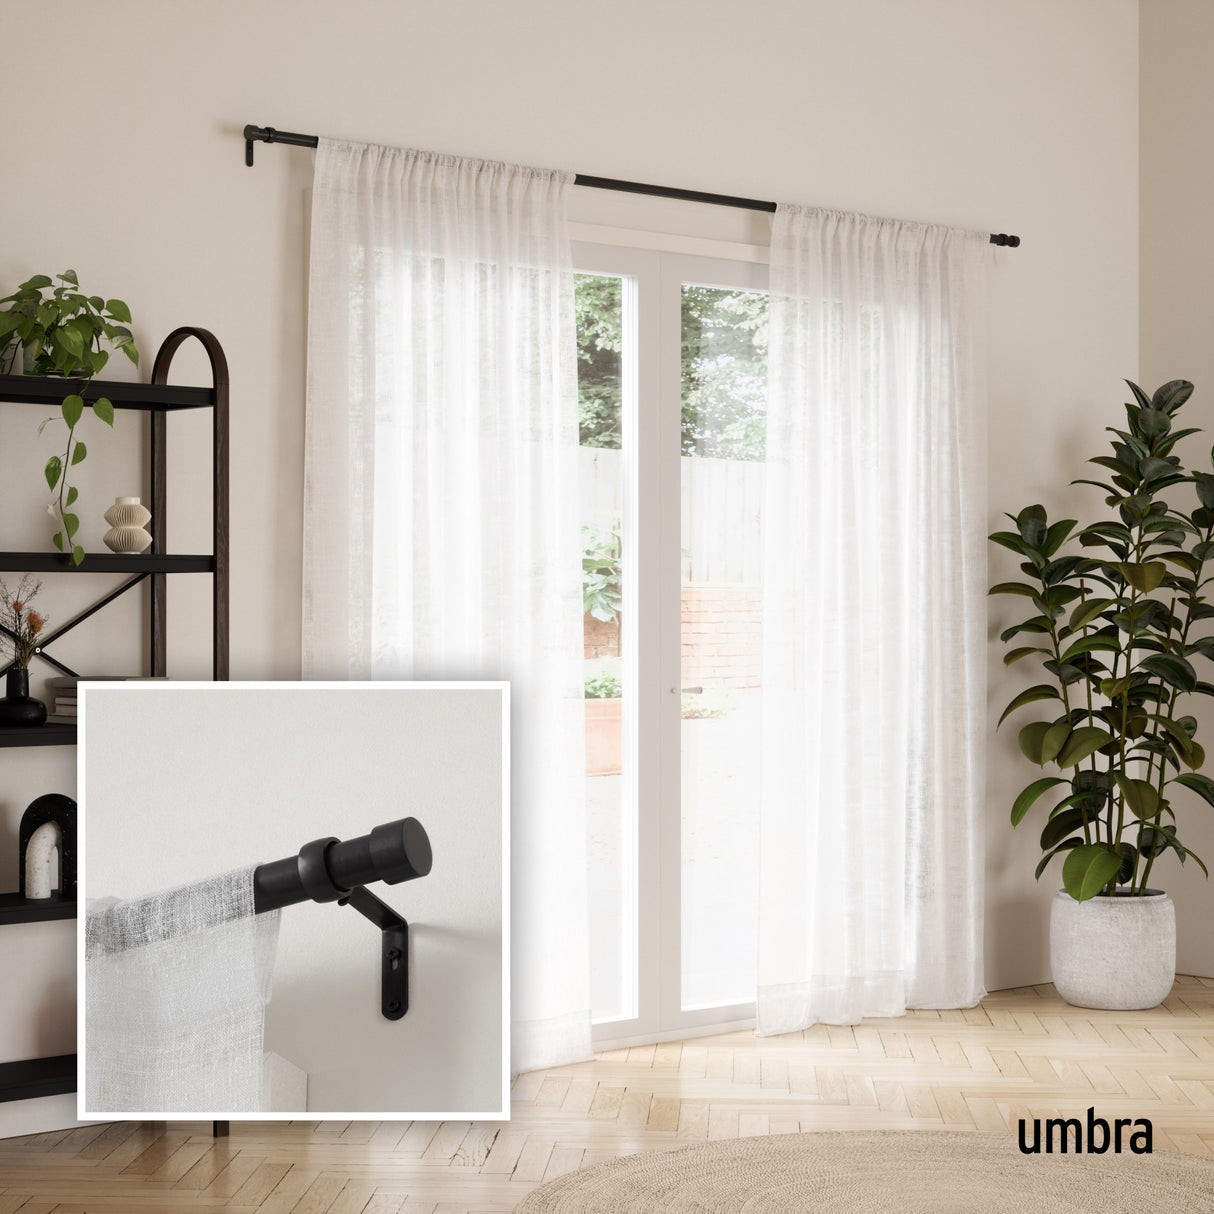 Single Curtain Rods | color: Brushed-Black | size: 66-120" (168-305 cm) | diameter: 1" (2.5 cm)